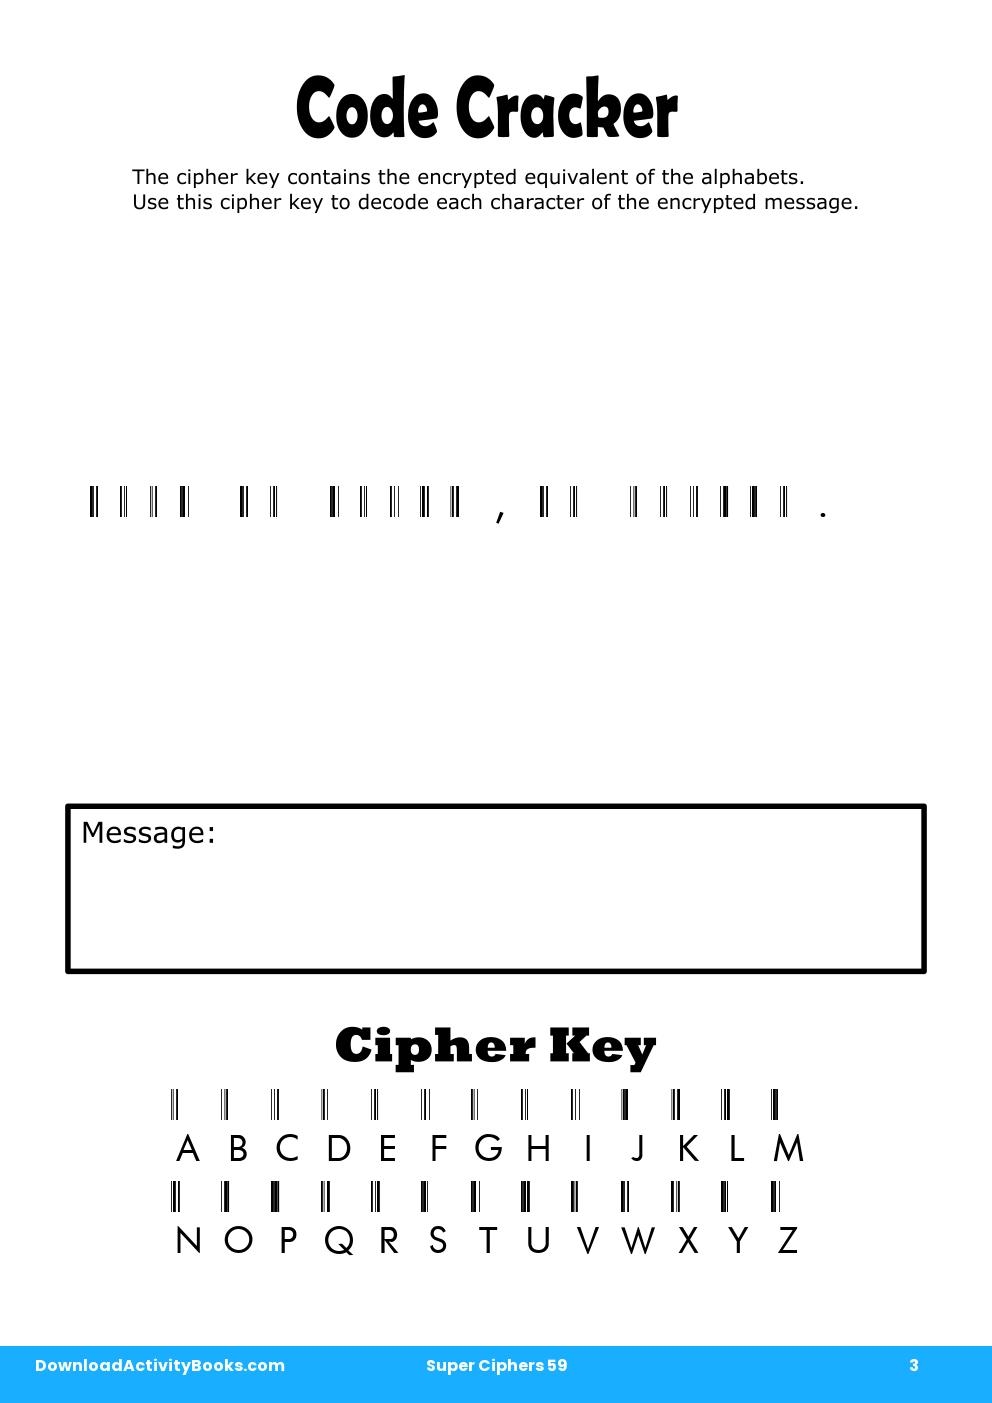 Code Cracker in Super Ciphers 59